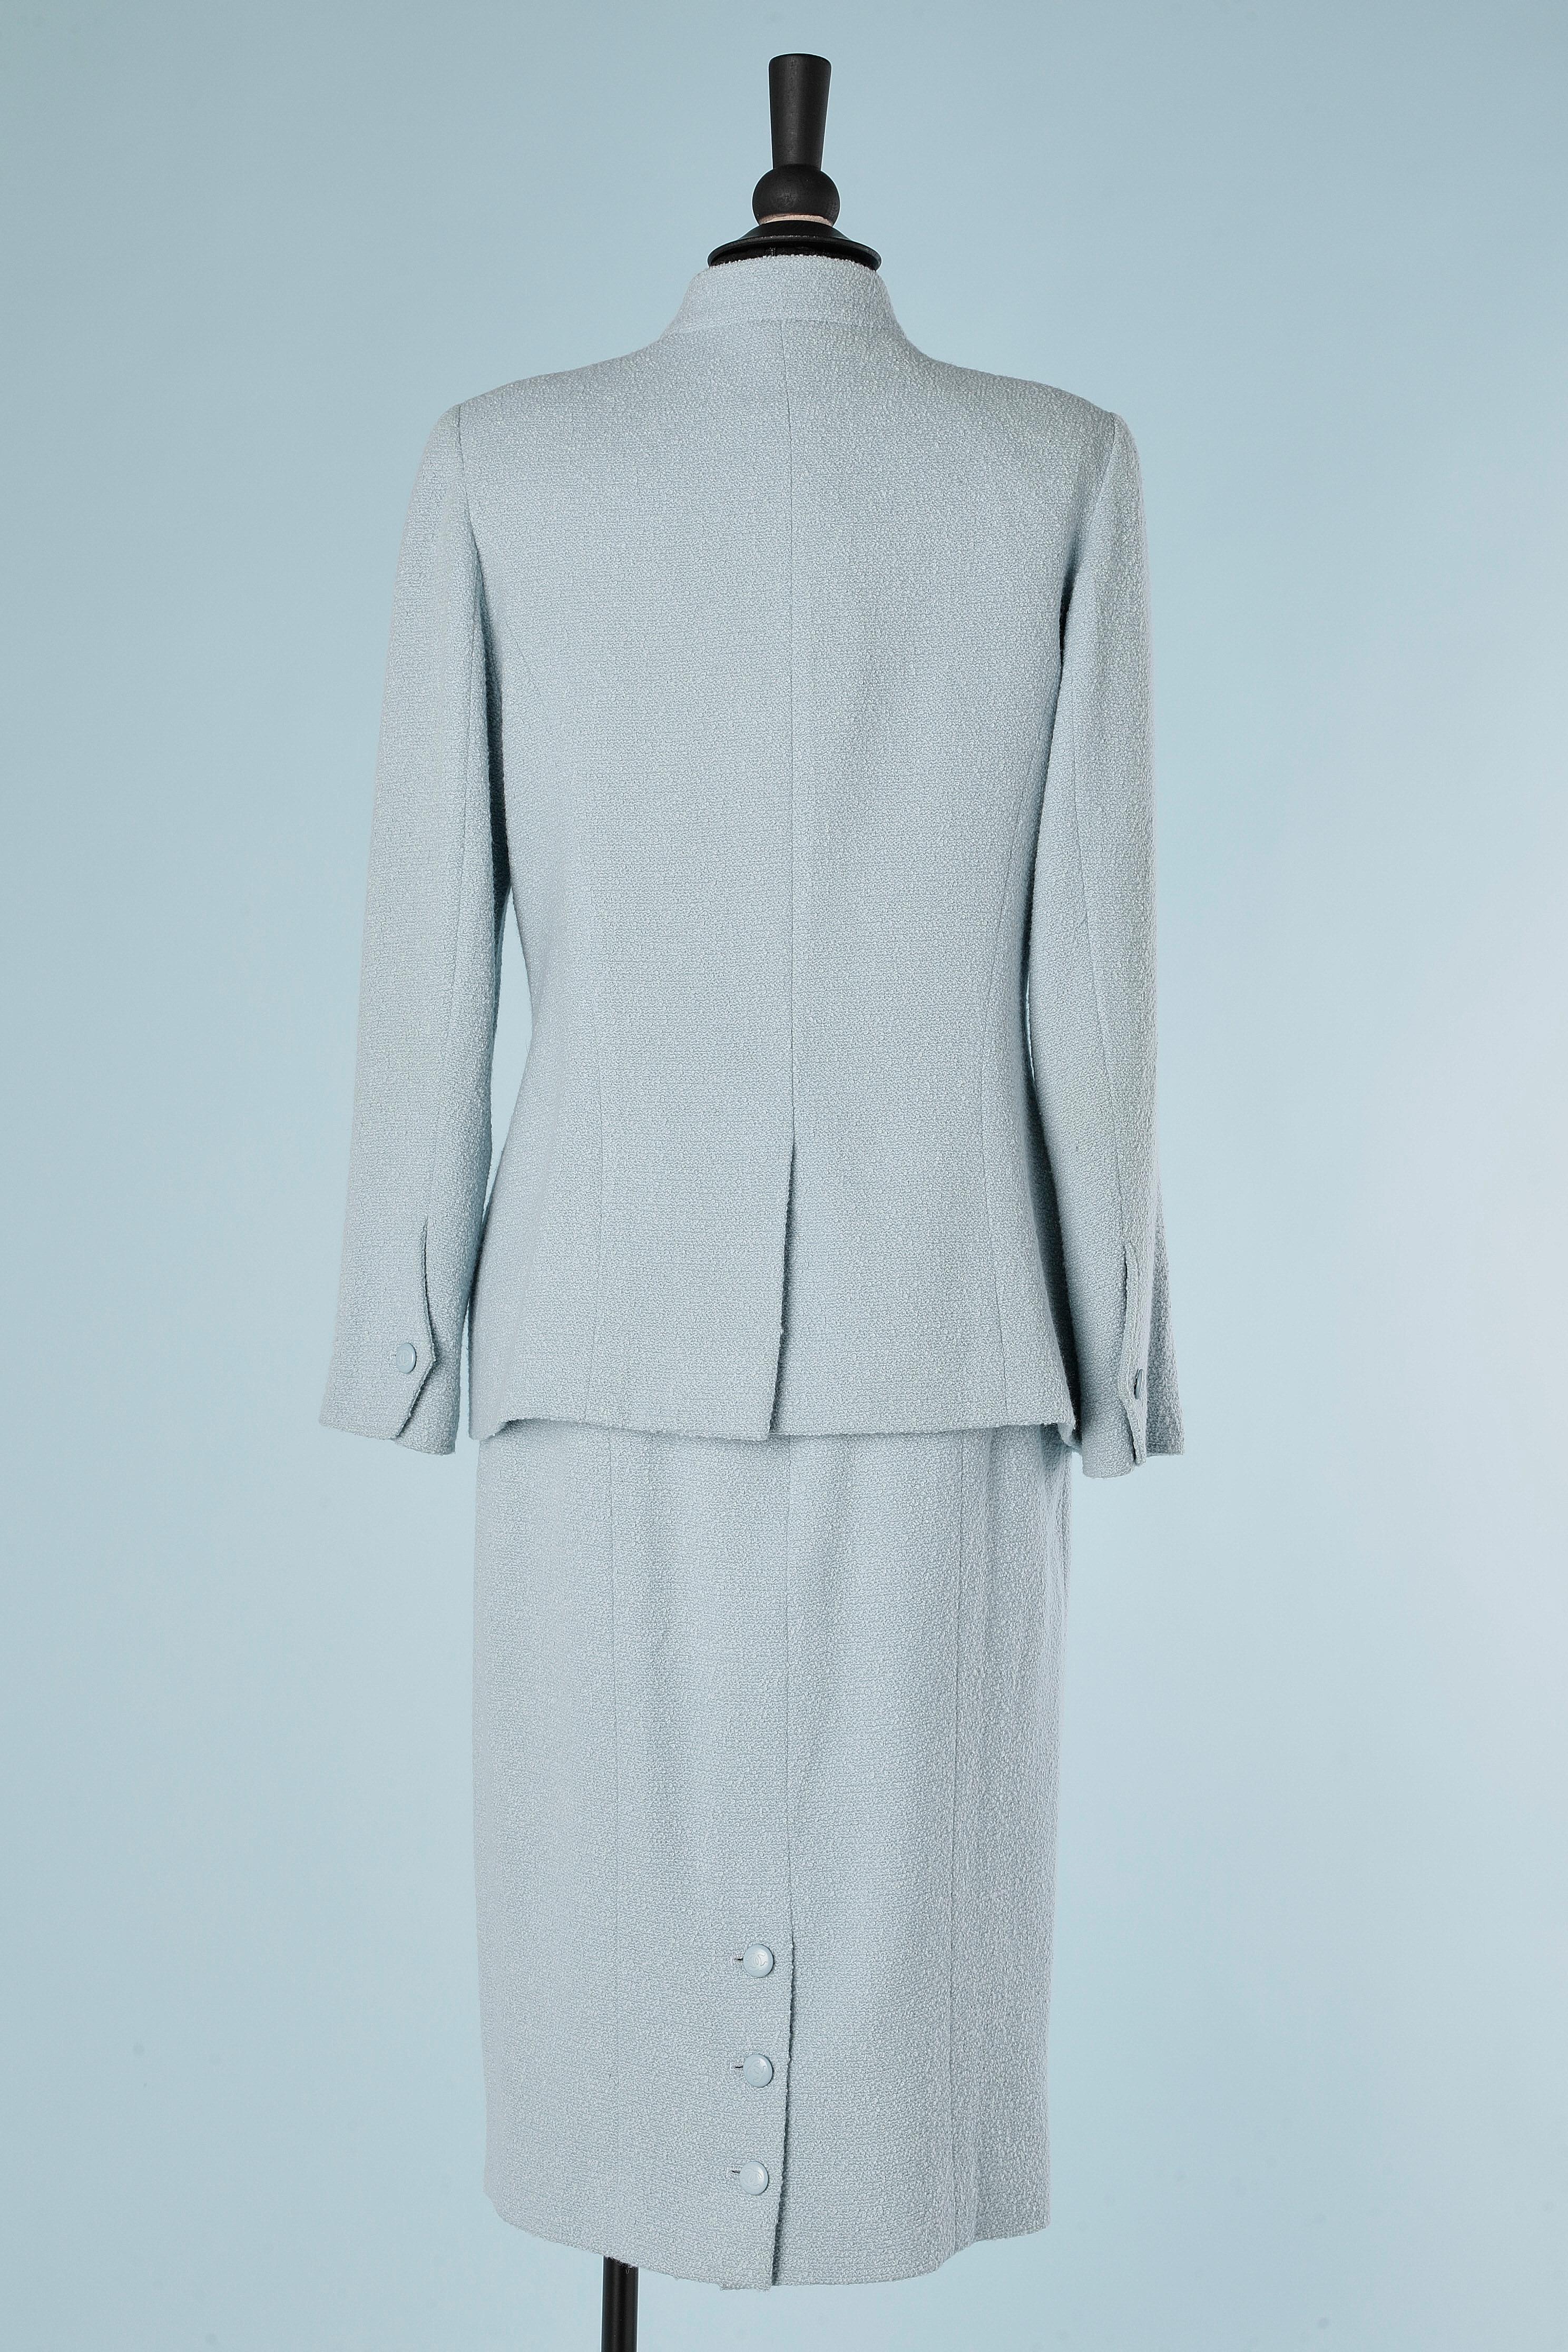 Pale blue wool bouclette skirt suit  with branded buttons Chanel Boutique  In Excellent Condition For Sale In Saint-Ouen-Sur-Seine, FR